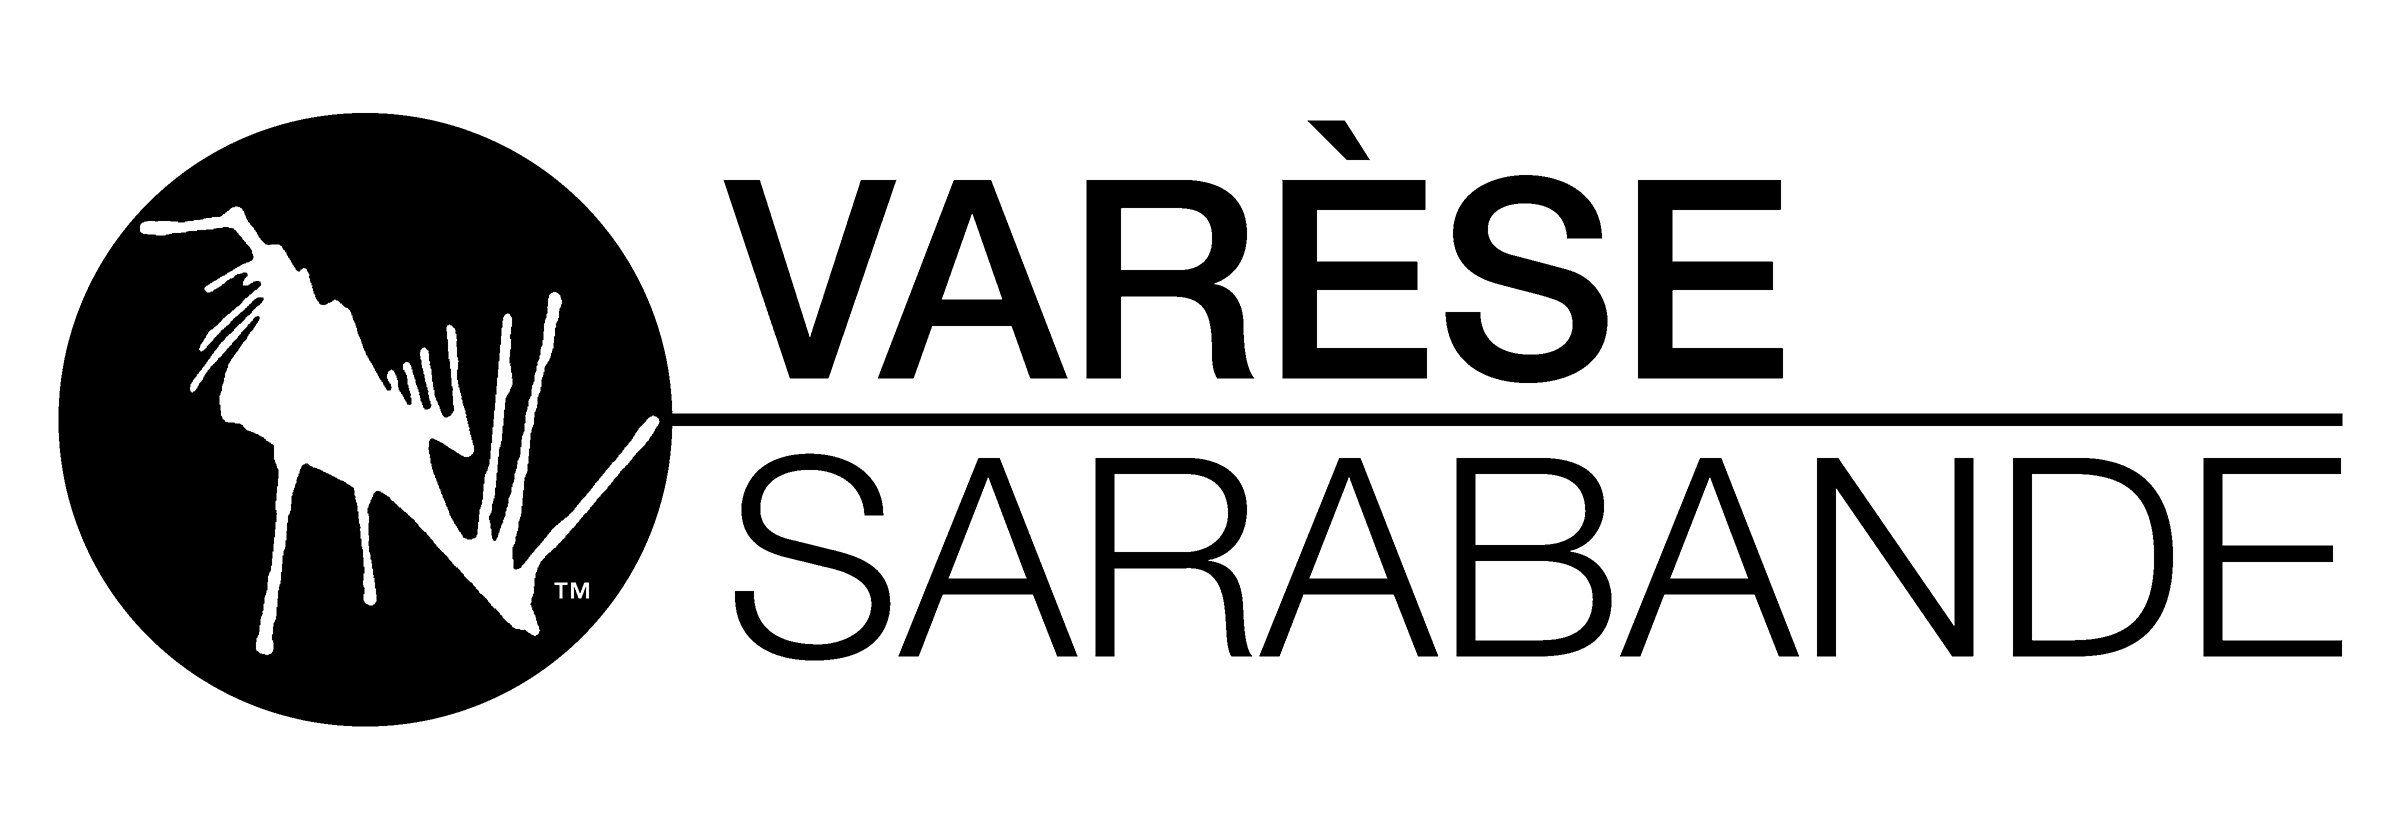 Varese Sarabande Logo - Varèse Sarabande (Creator)